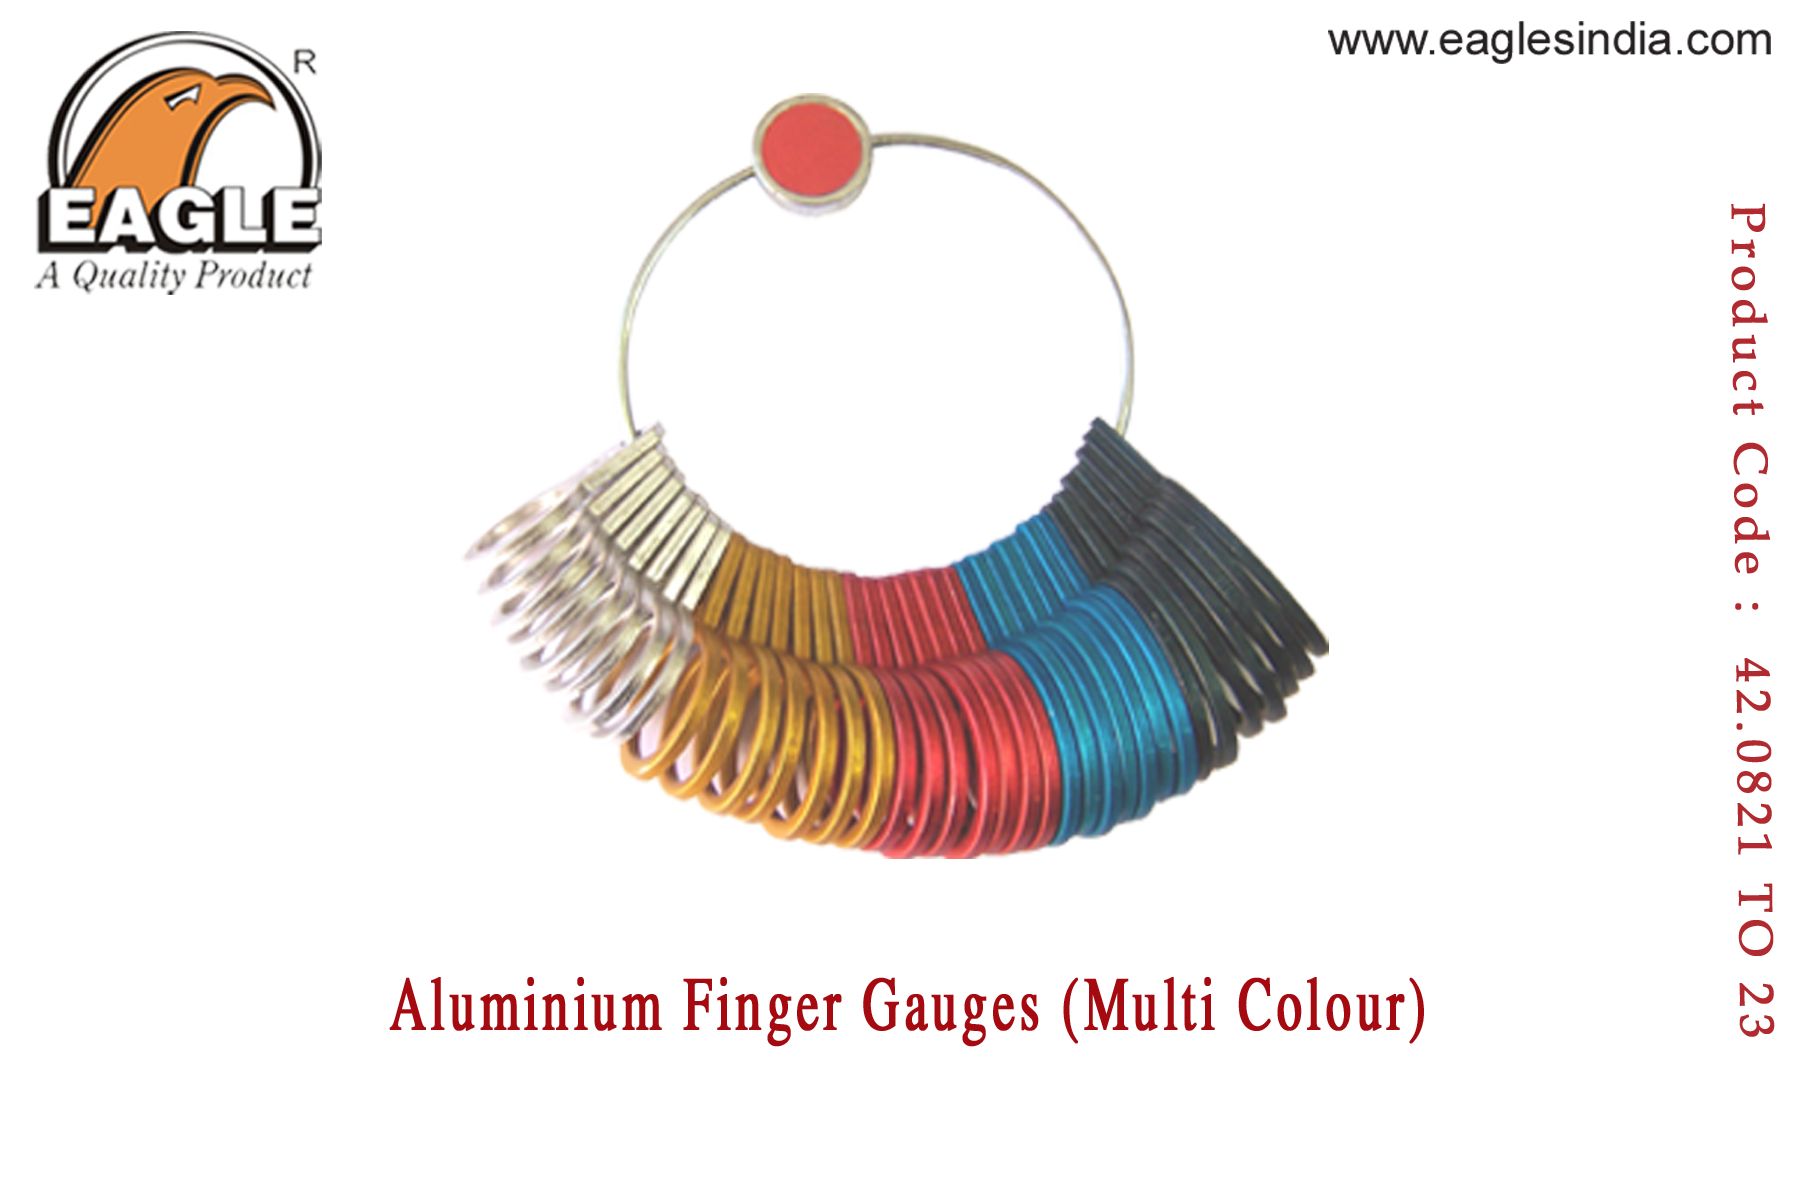 Aluminum Finger Gauges